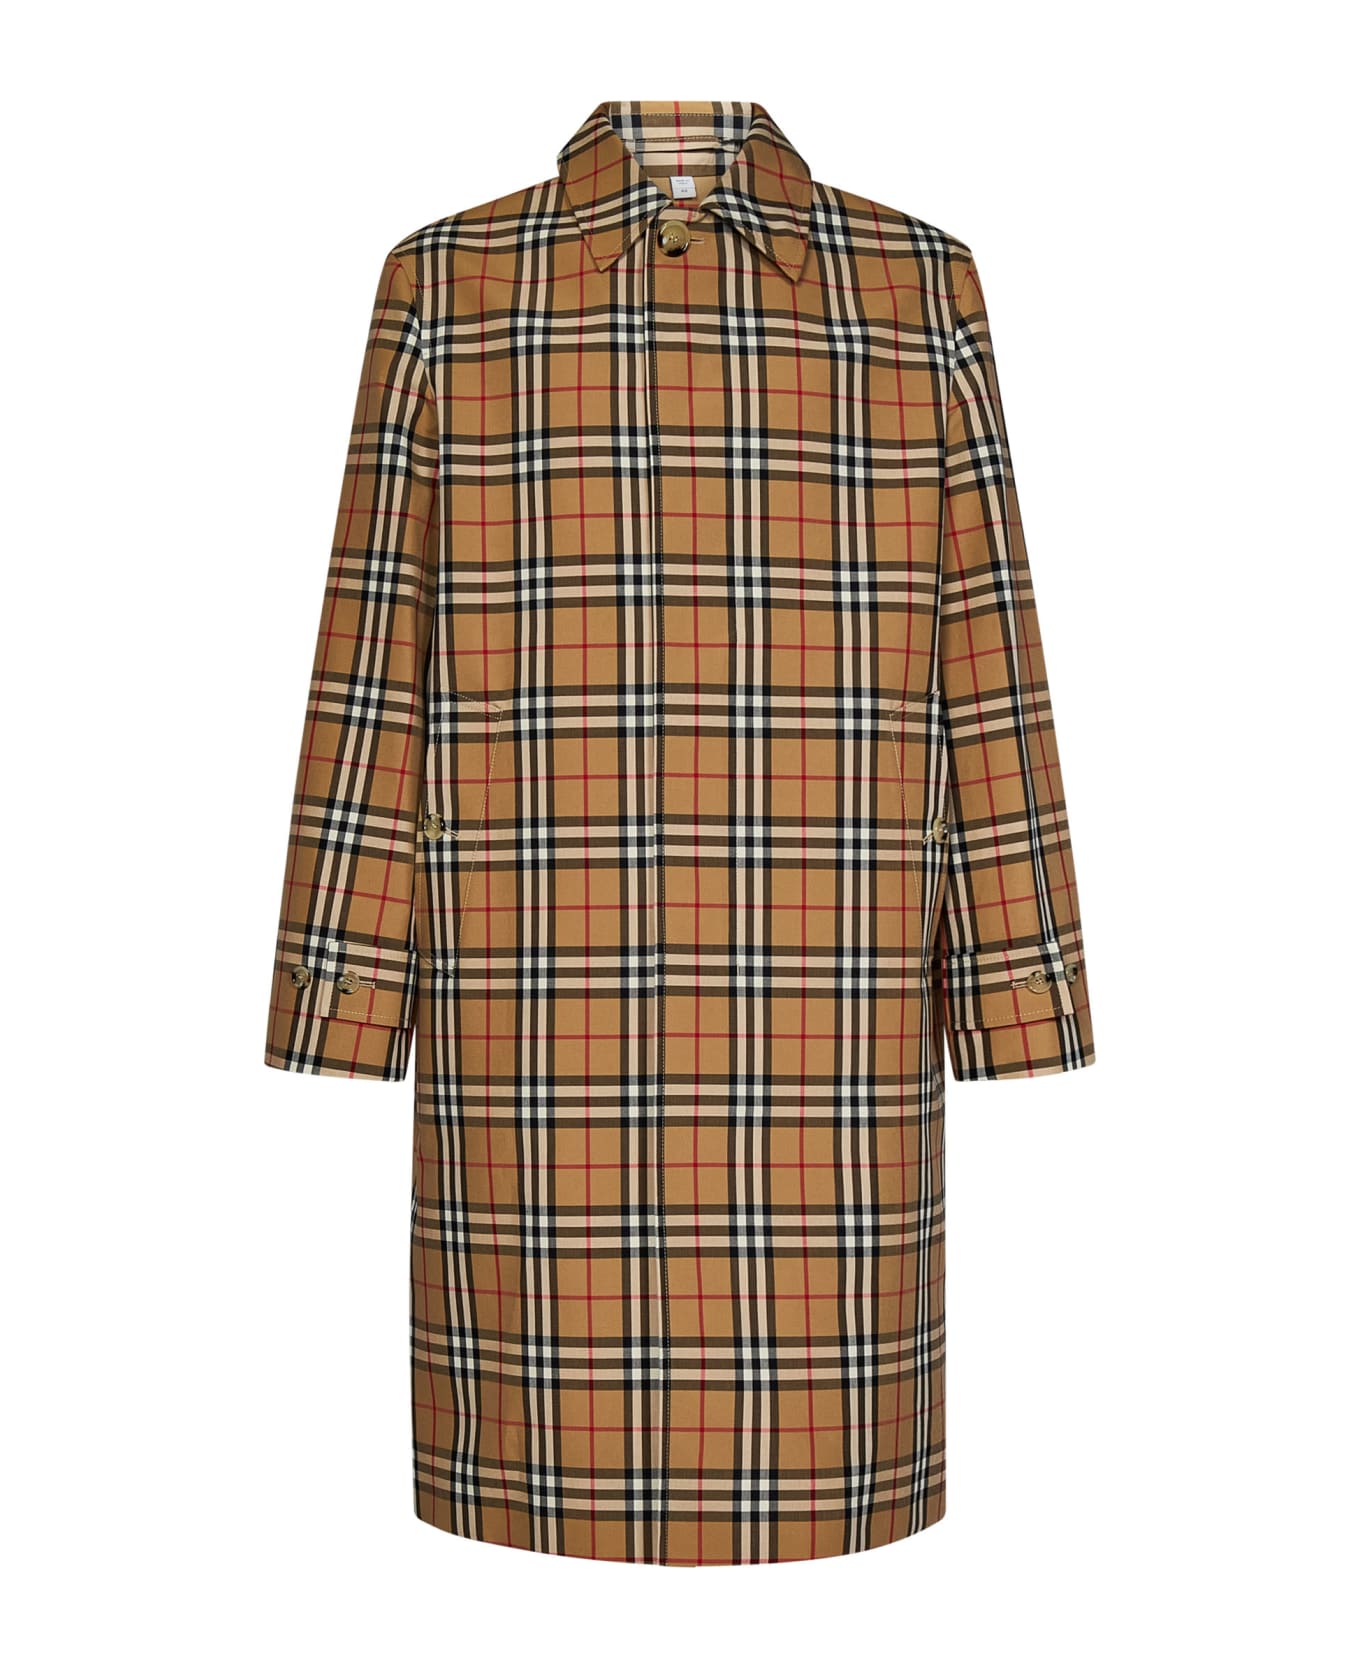 Burberry 'brookvale' Beige Coat With All-over Vintage Check Motif In Cotton Blend Man - Beige コート